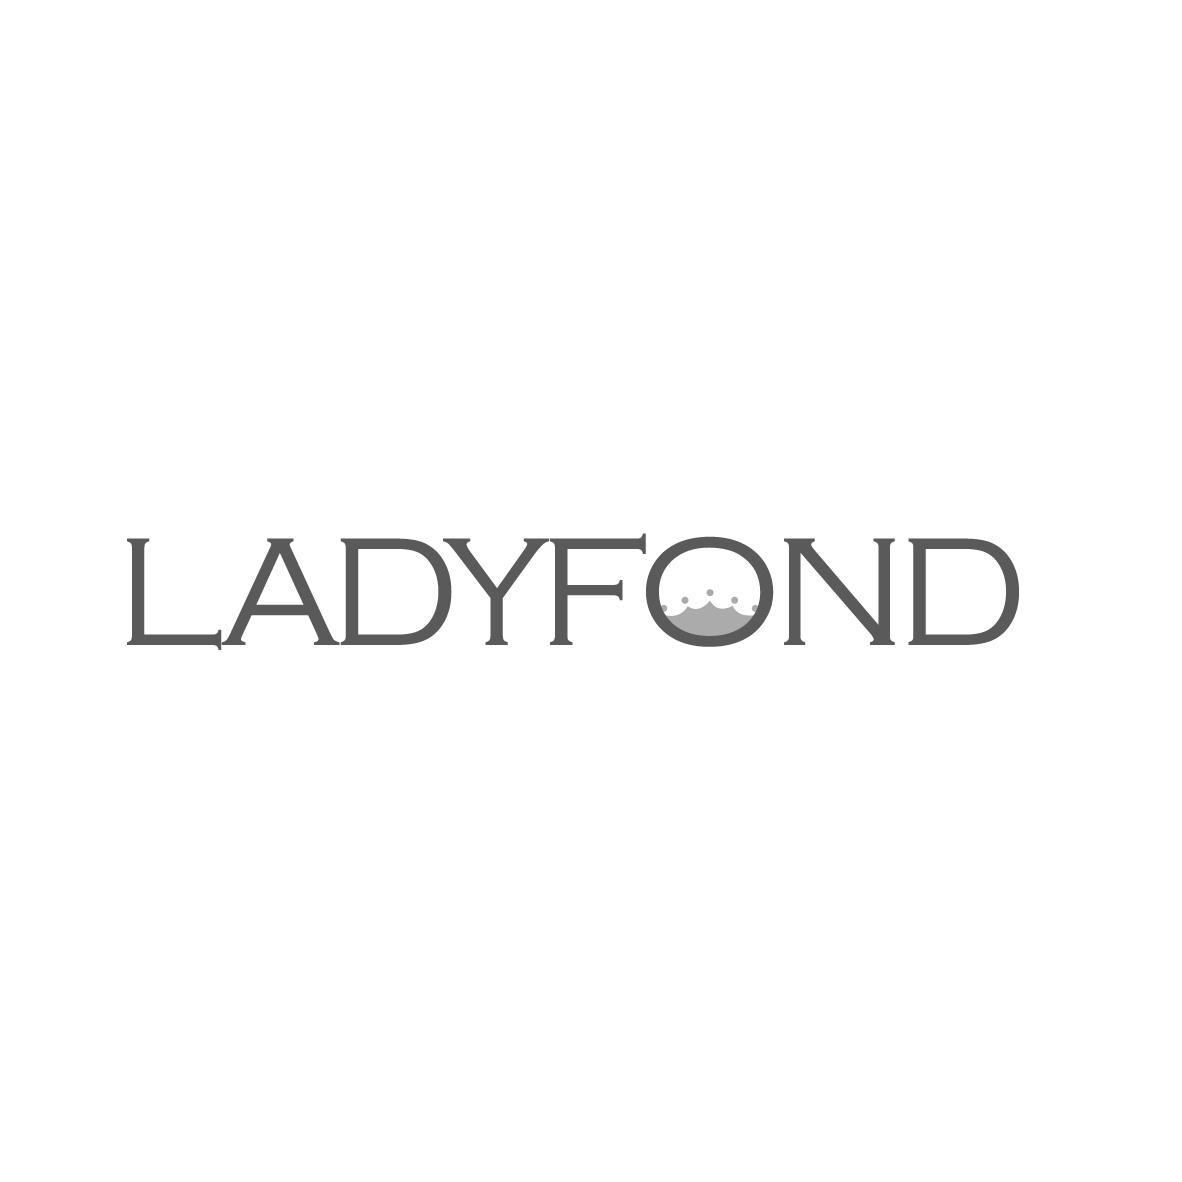 LADYFOND